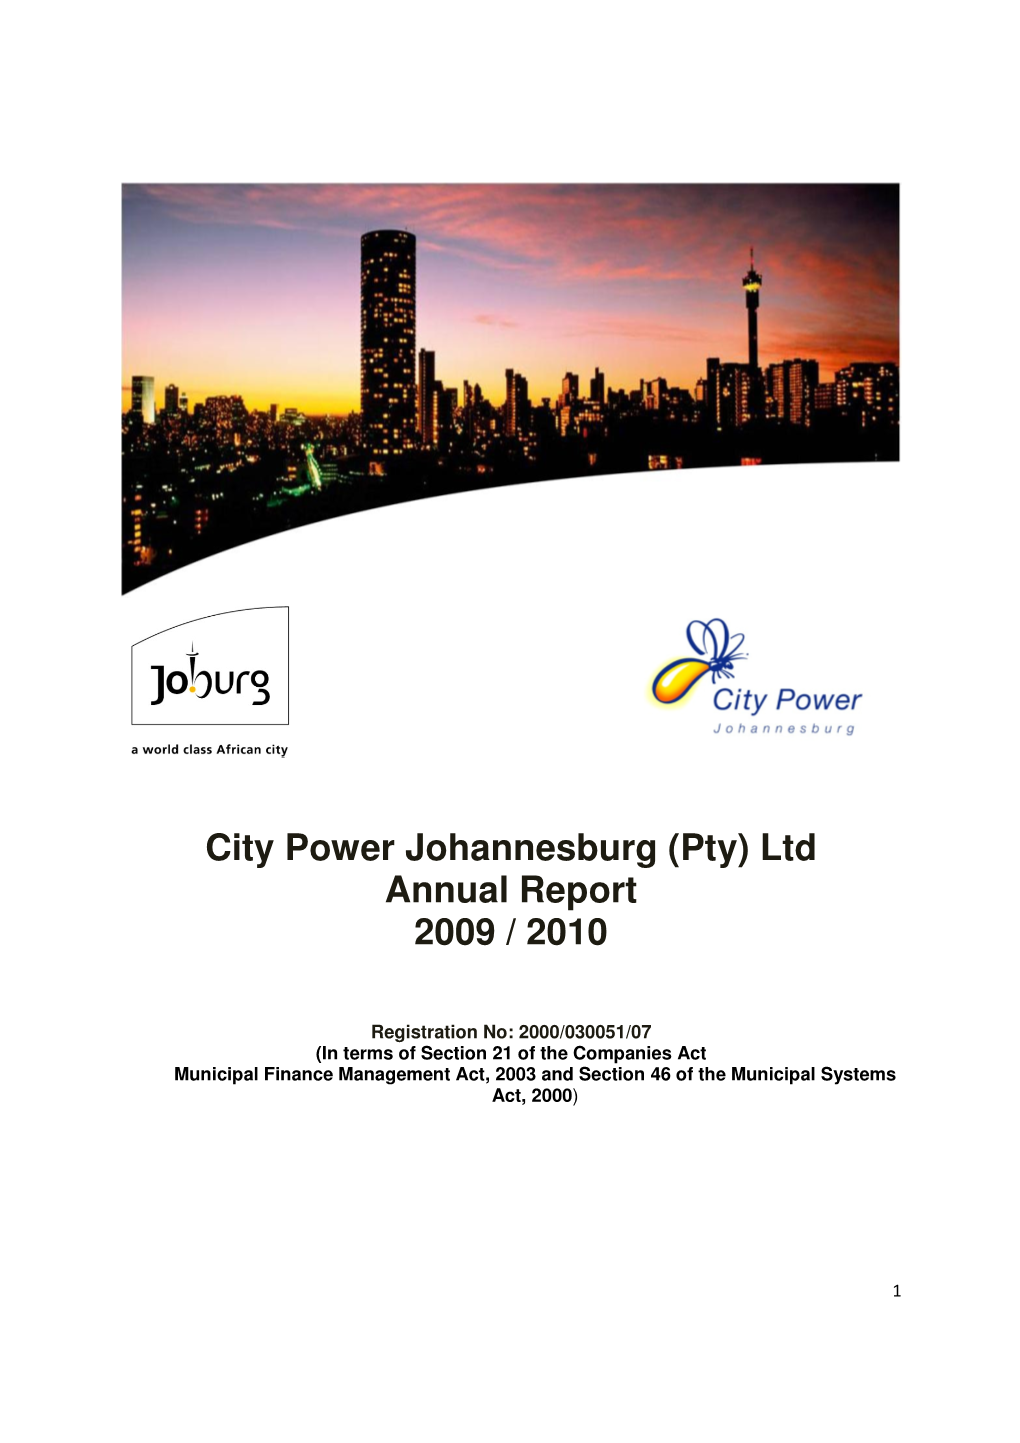 City Power Johannesburg (Pty) Ltd Annual Report 2009 / 2010